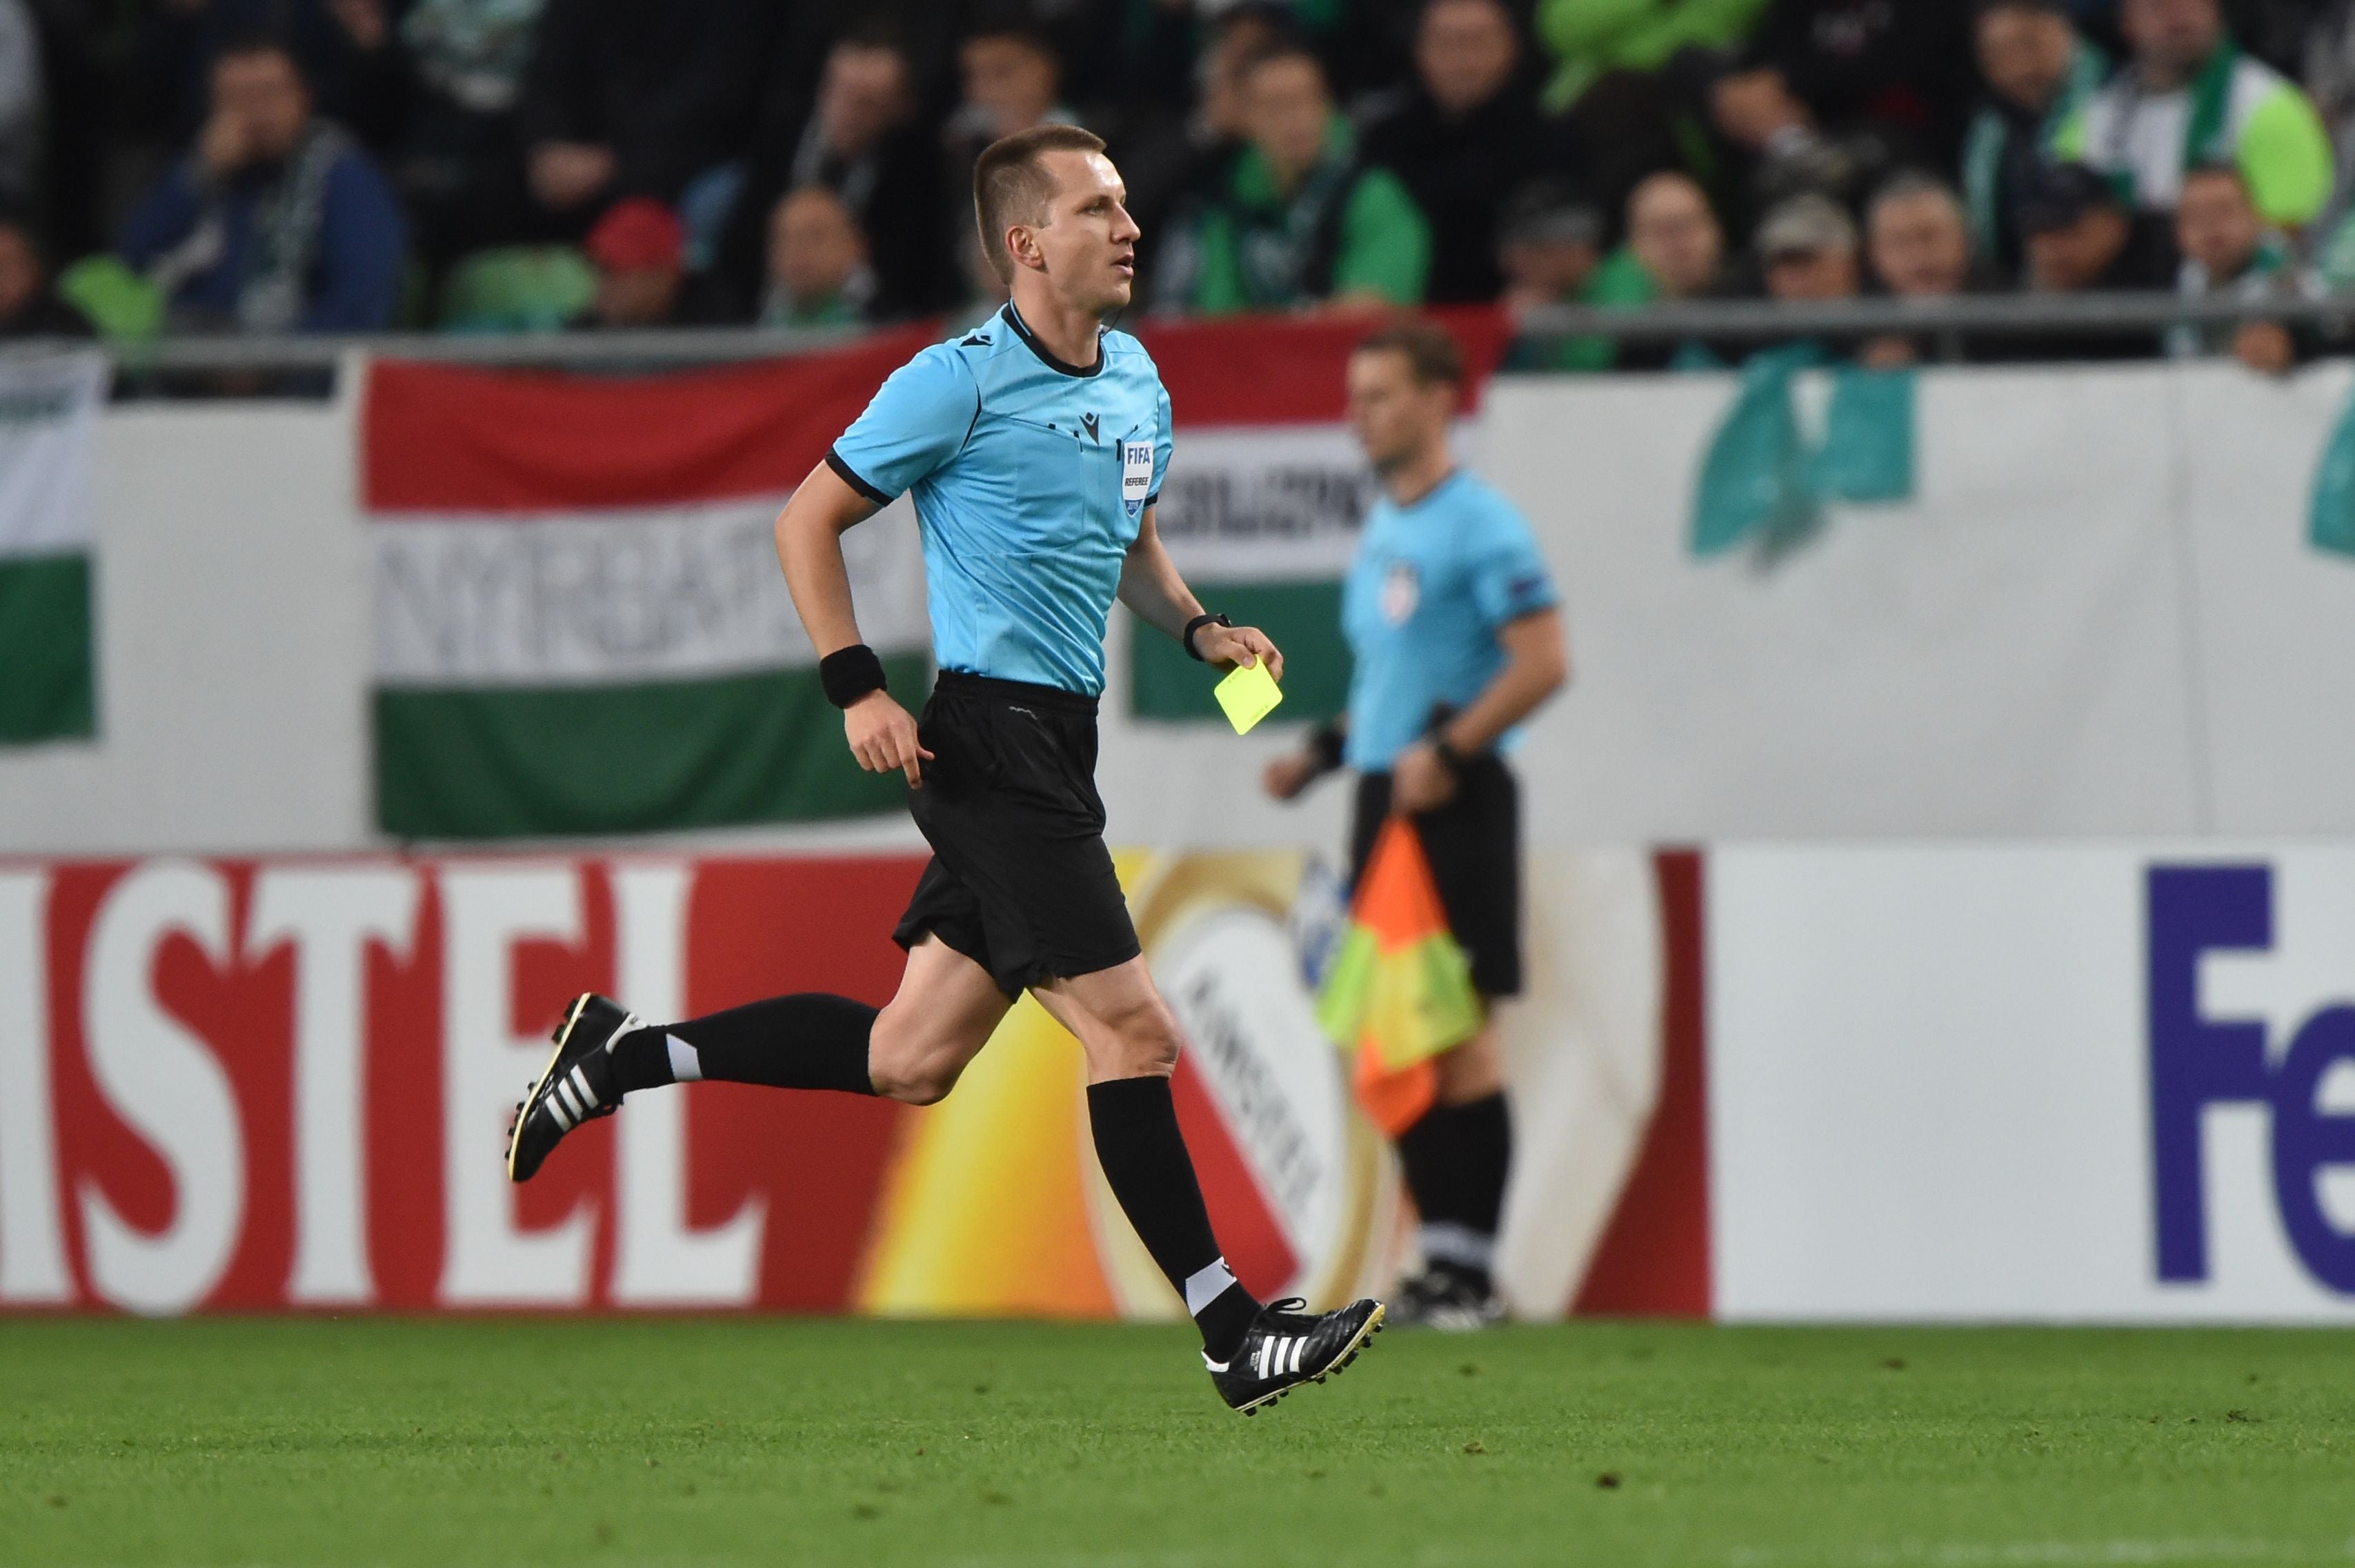 Bartosz Frankowski has been confirmed as tonight’s referee